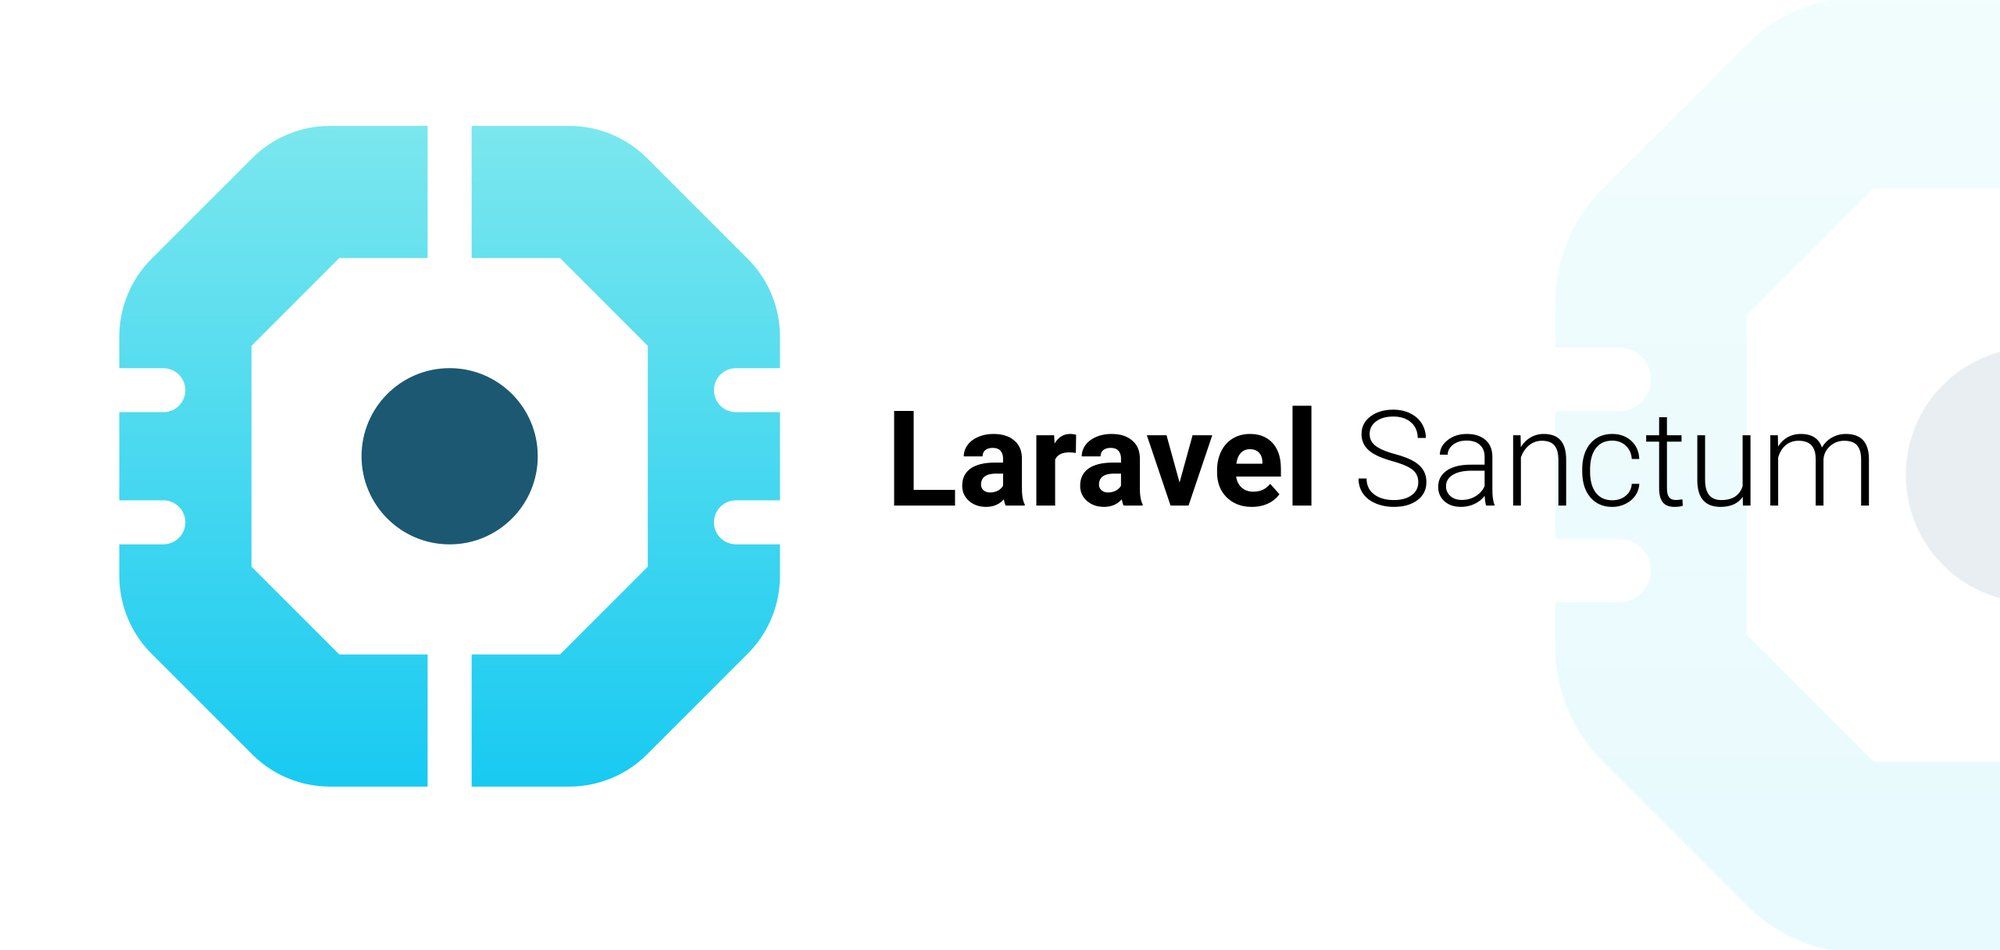 Getting Started with Laravel Sanctum